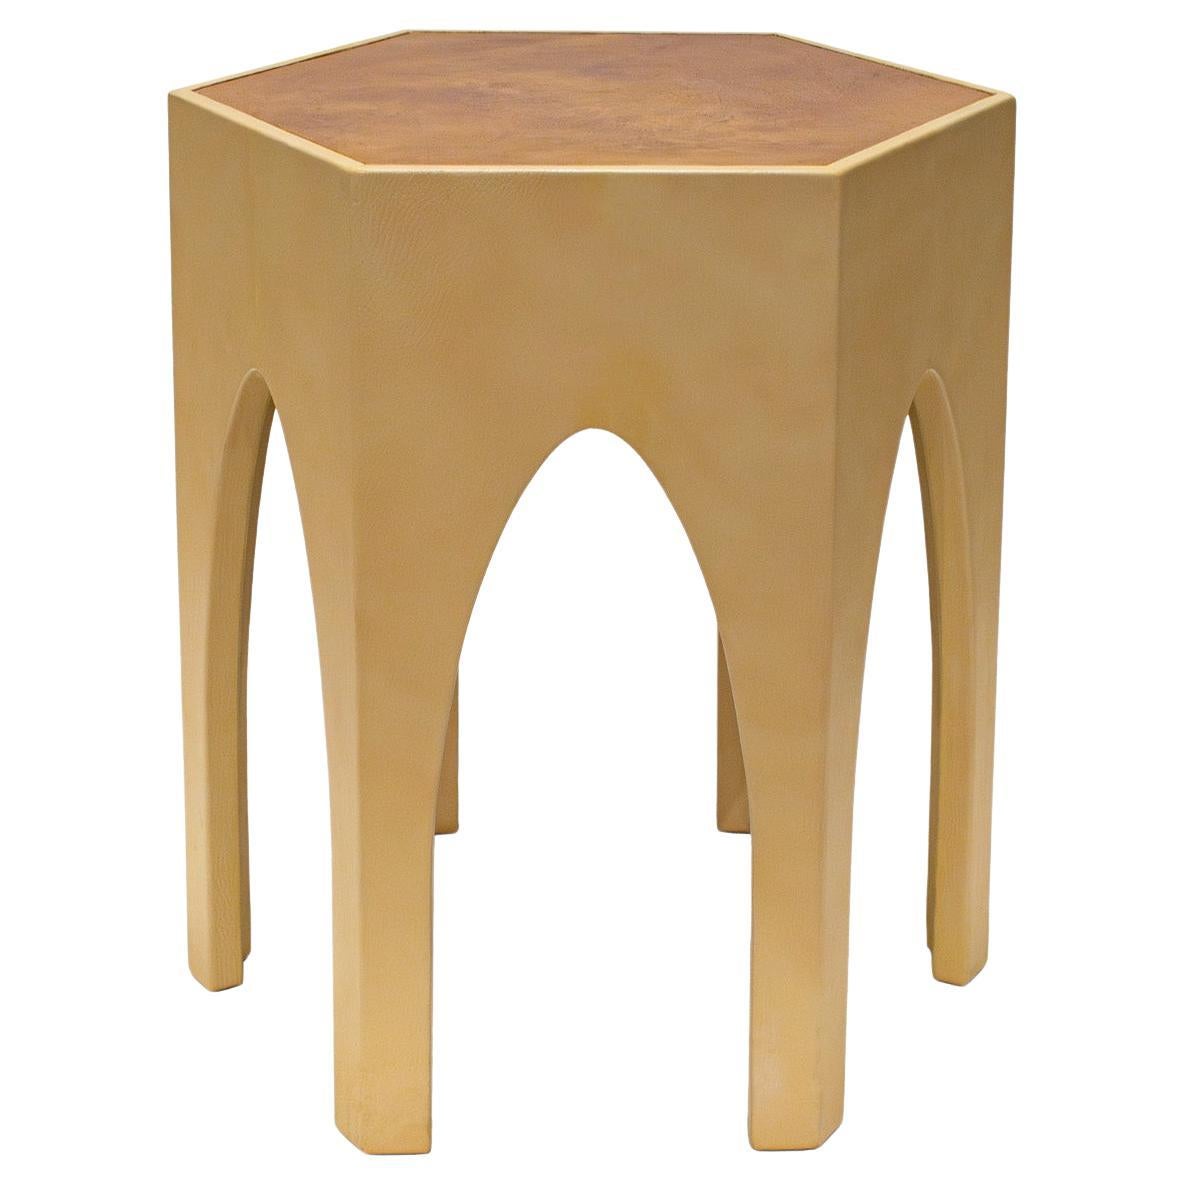 Prototype de table cathédrale en cuir de Karl Springer 1976-1978